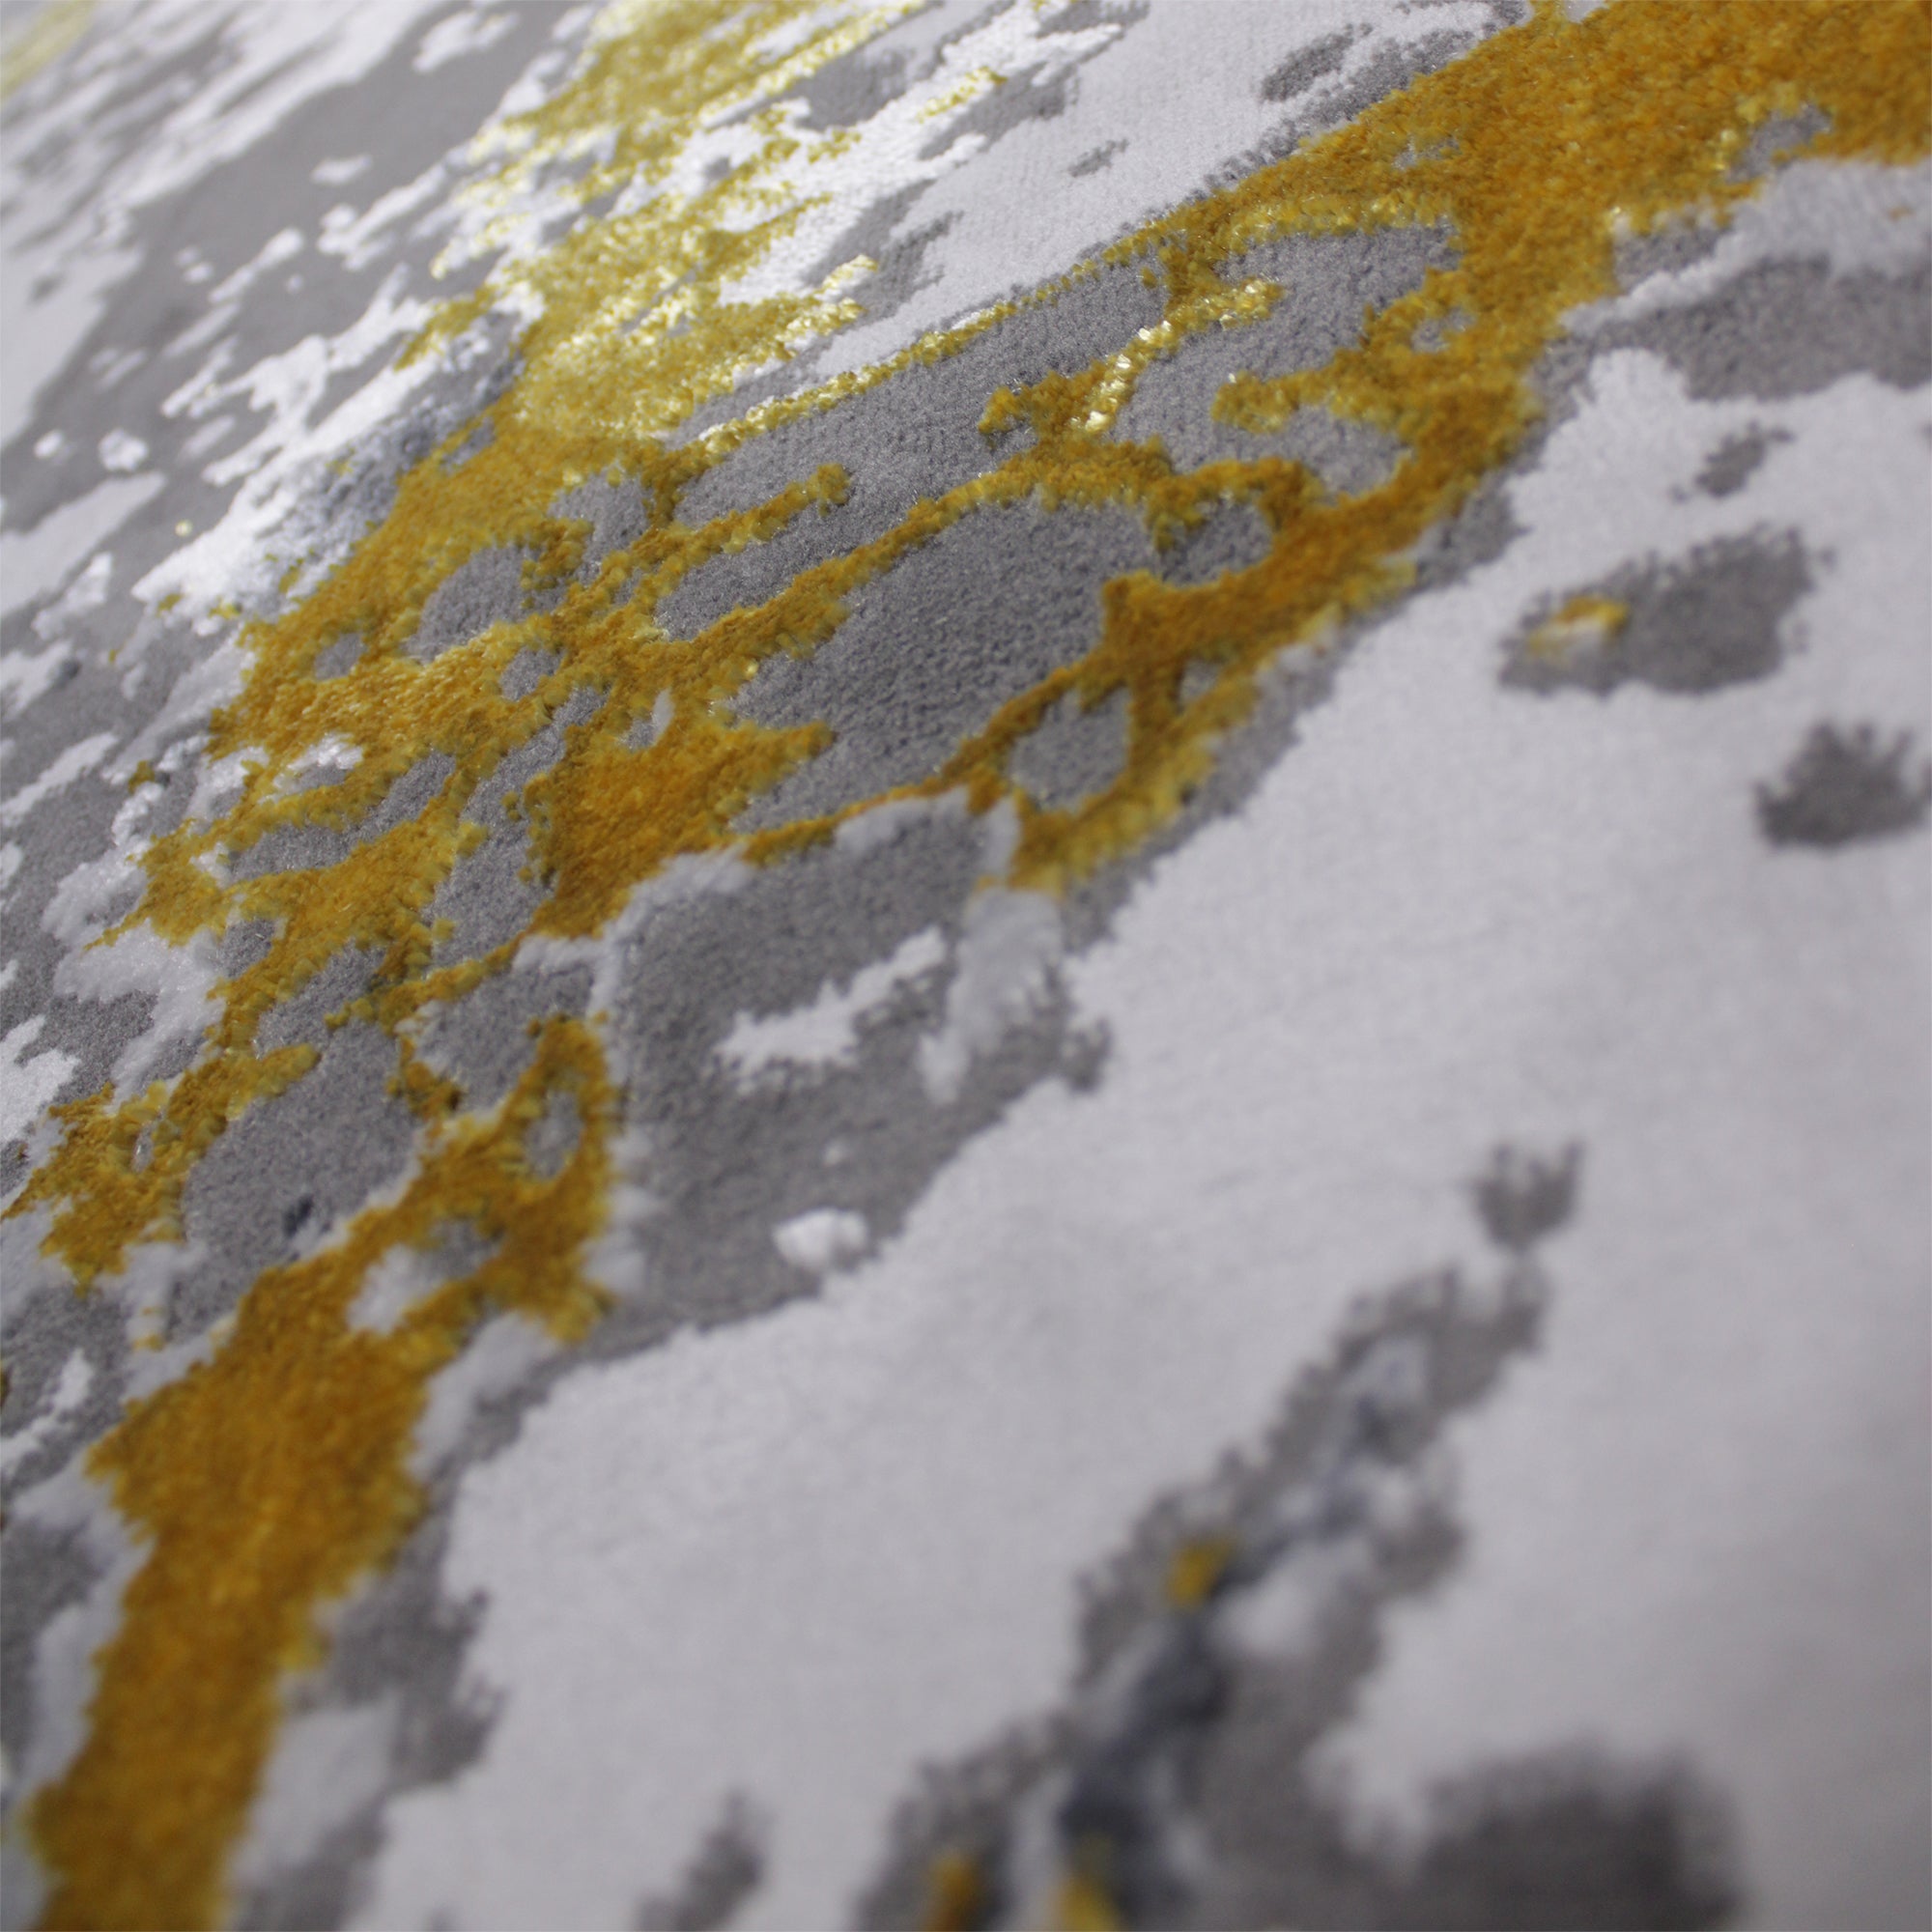 230x160 Babil Textured Turkish Shimmering Yarn Rug - Light Grey / Yellow 5769D-GY